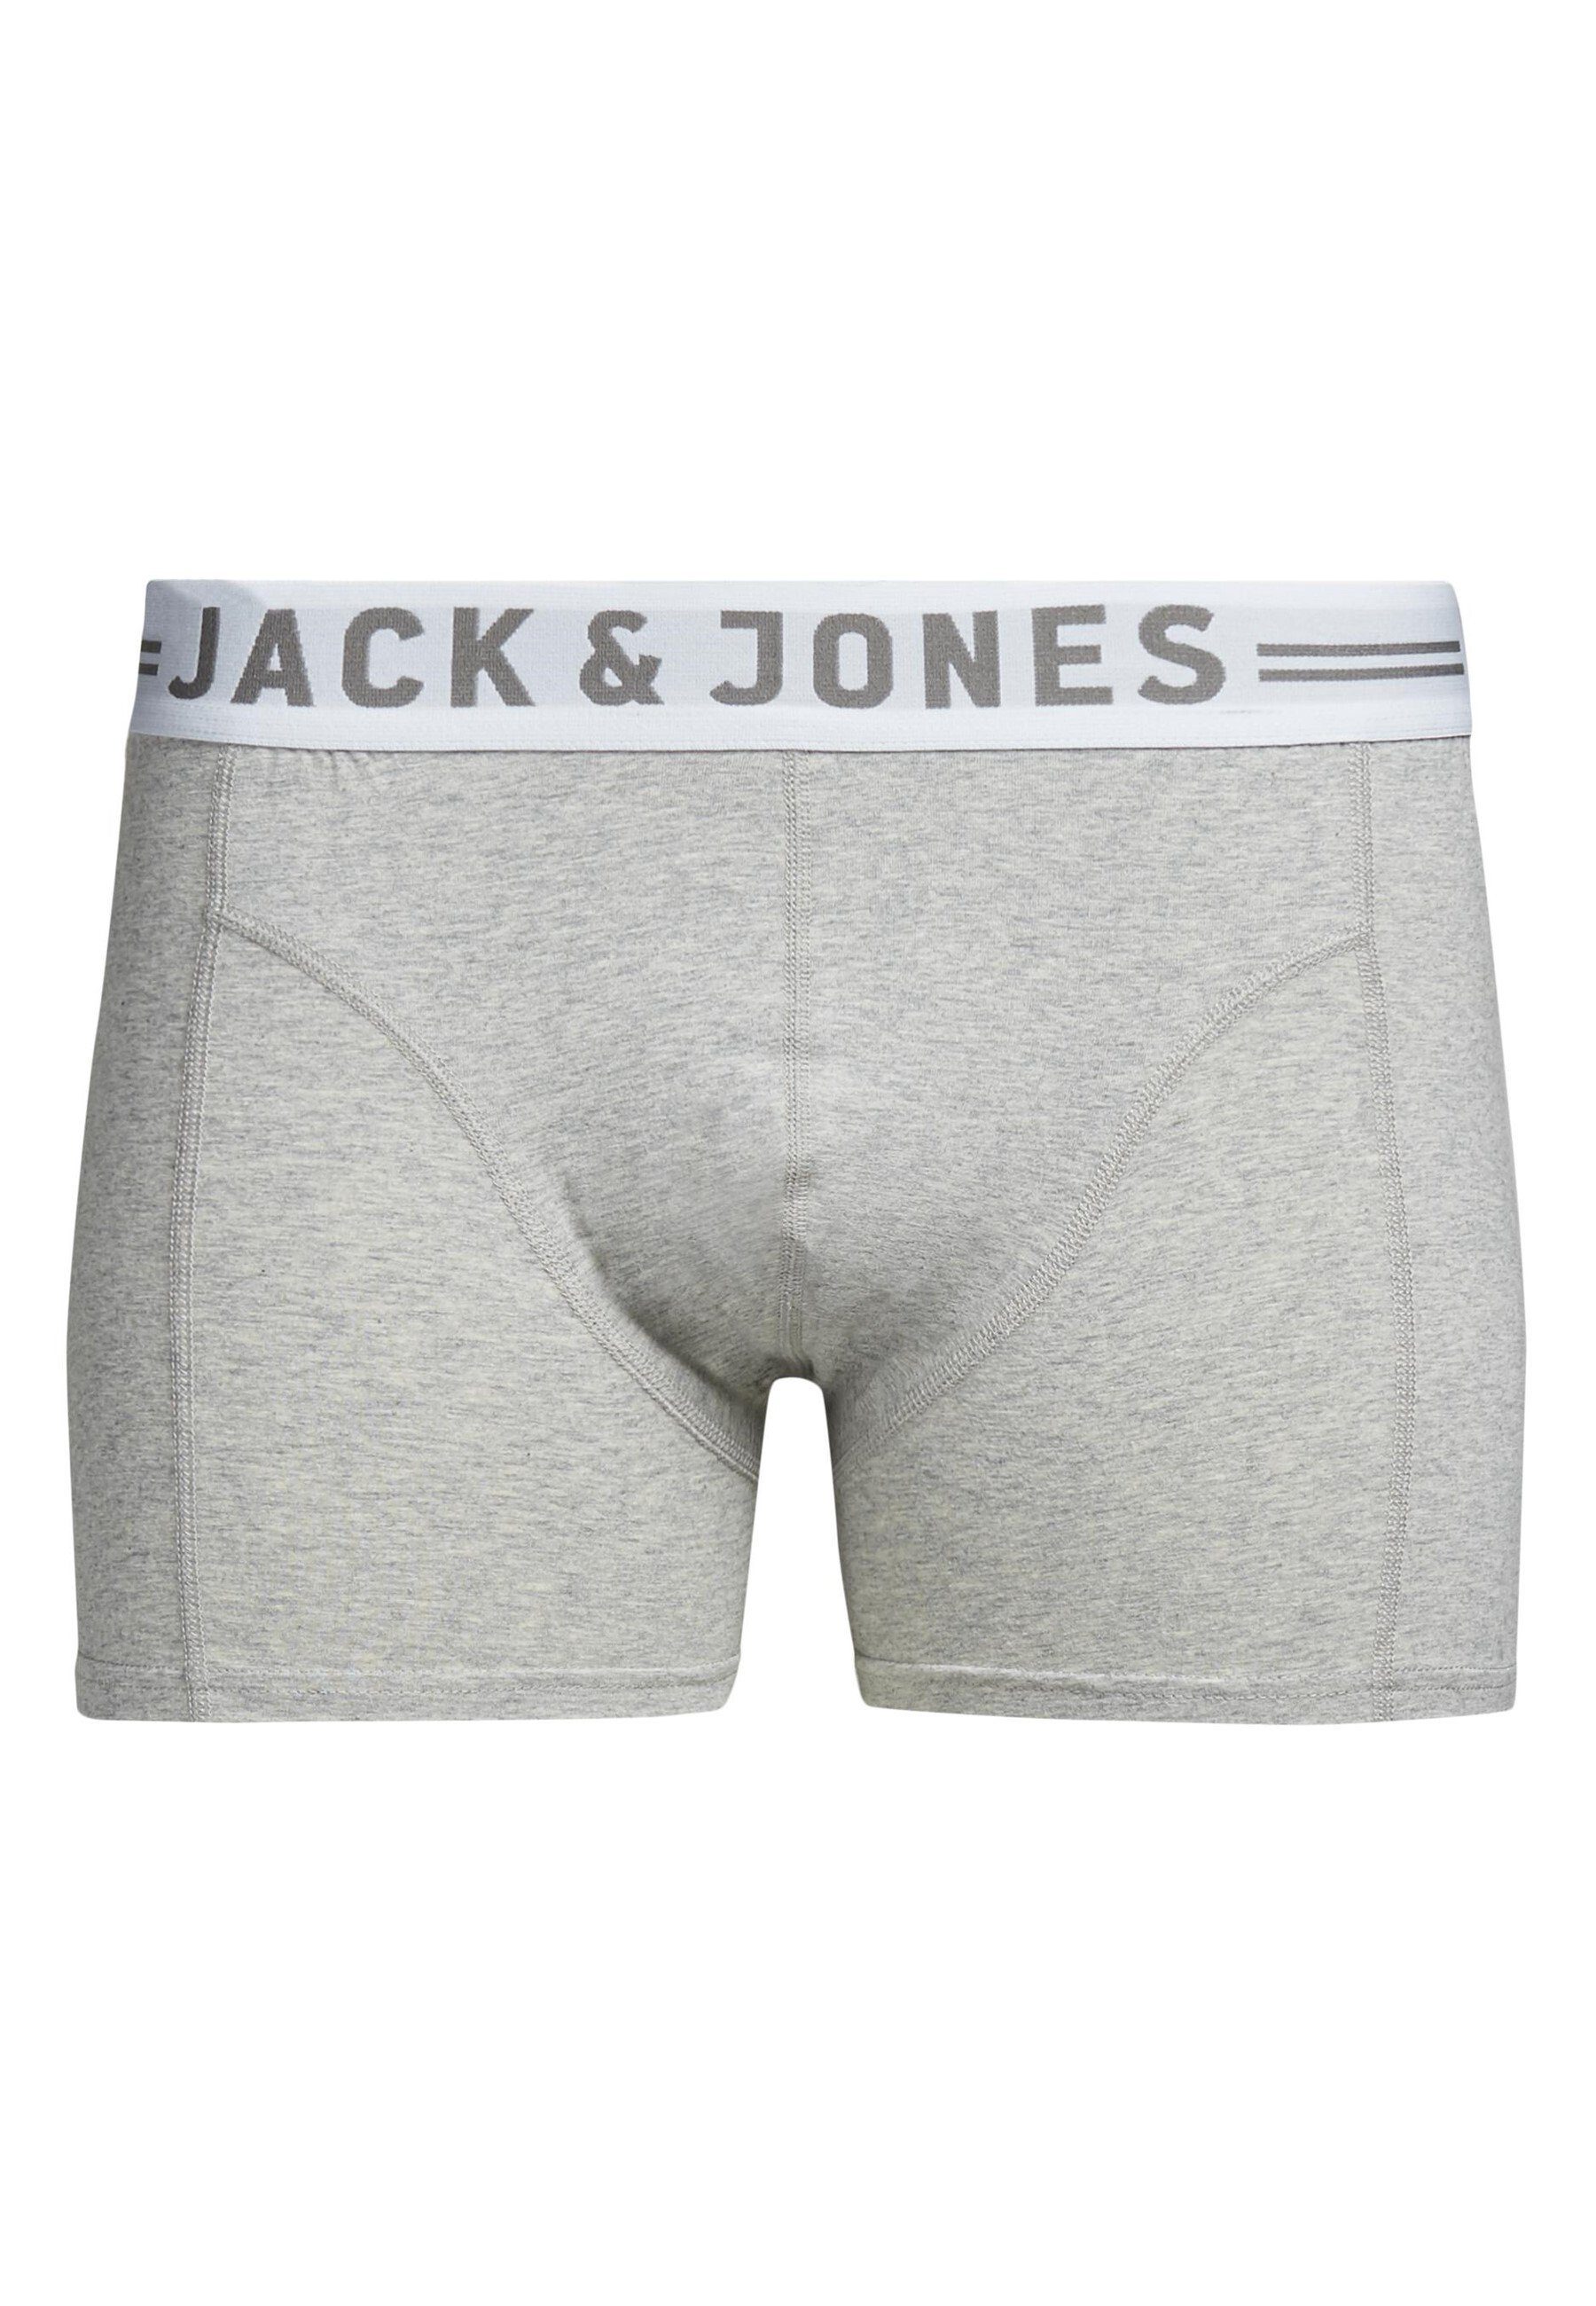 Jones Trunks Boxershorts Unterhose Jack hellgrau & Sense